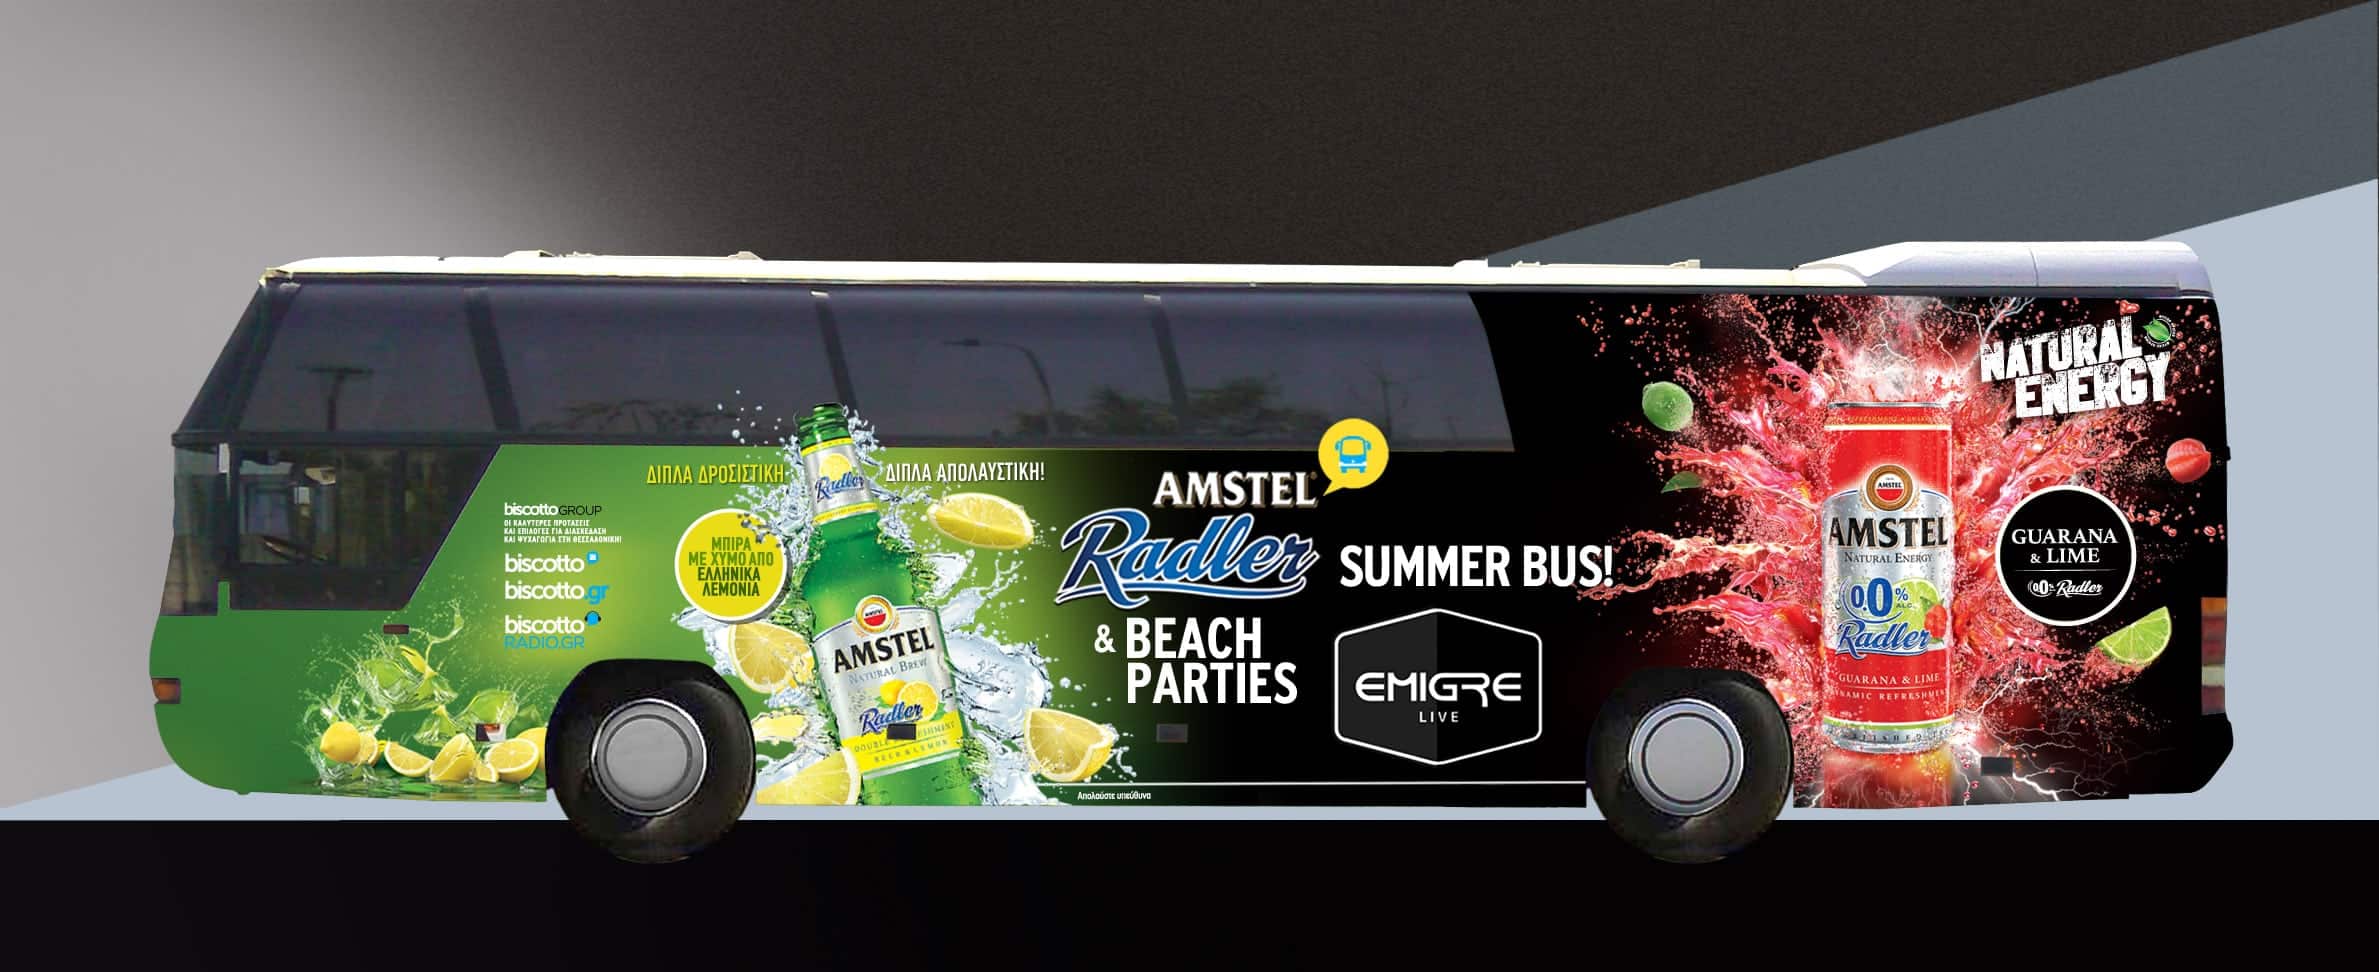 Amstel Radler Summer Bus